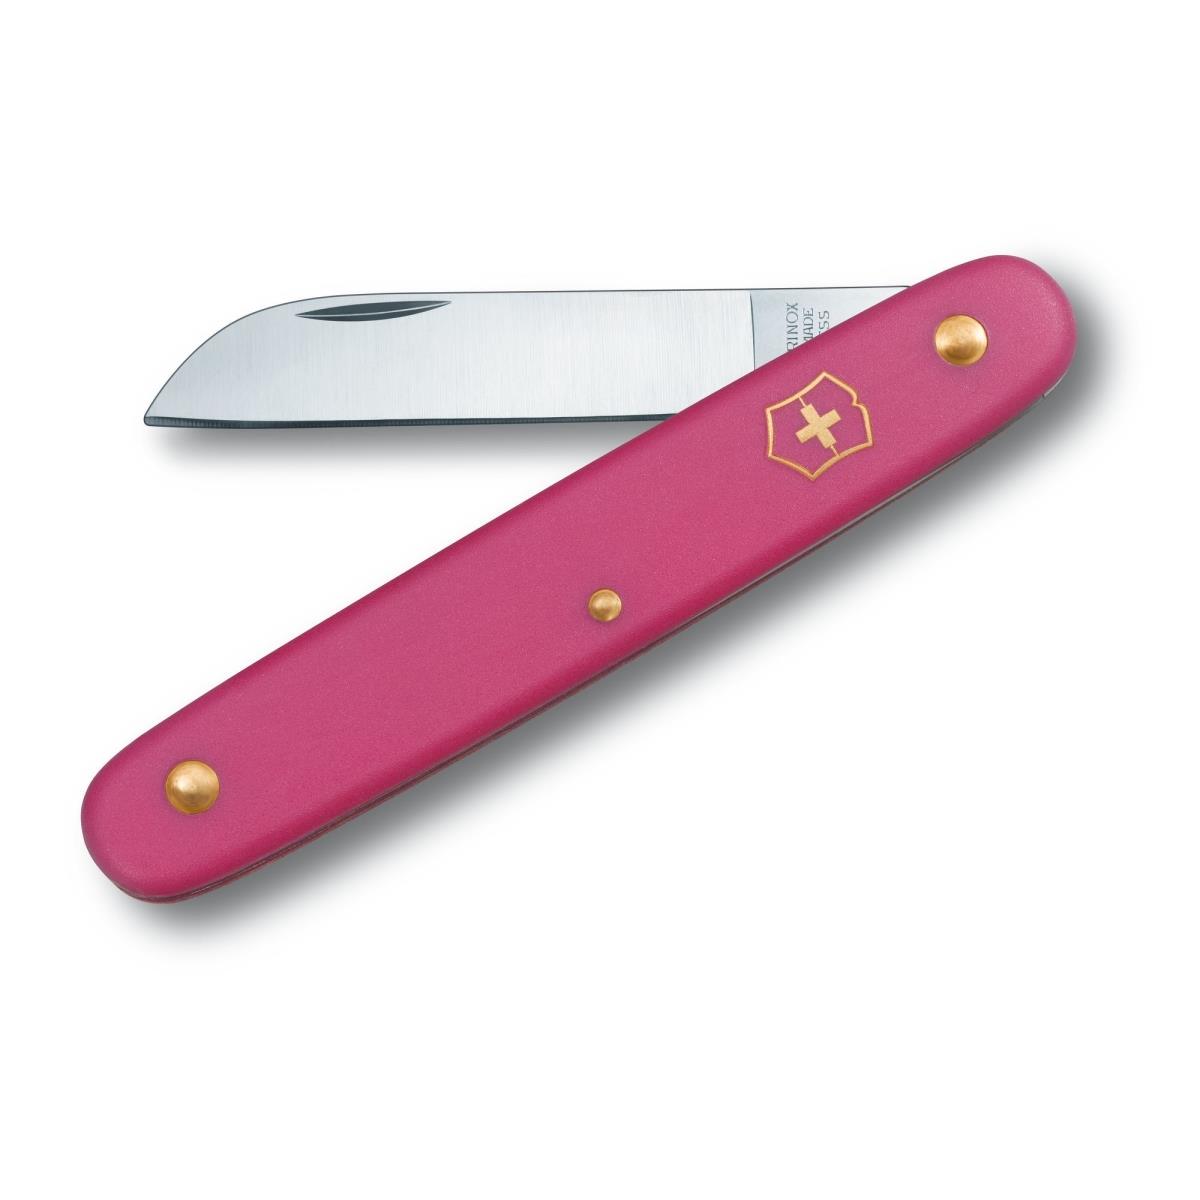 Нож 3.9050.53B1 Floral Розовый VICTORINOX нож 0 6223 942 нож брелок victorinox